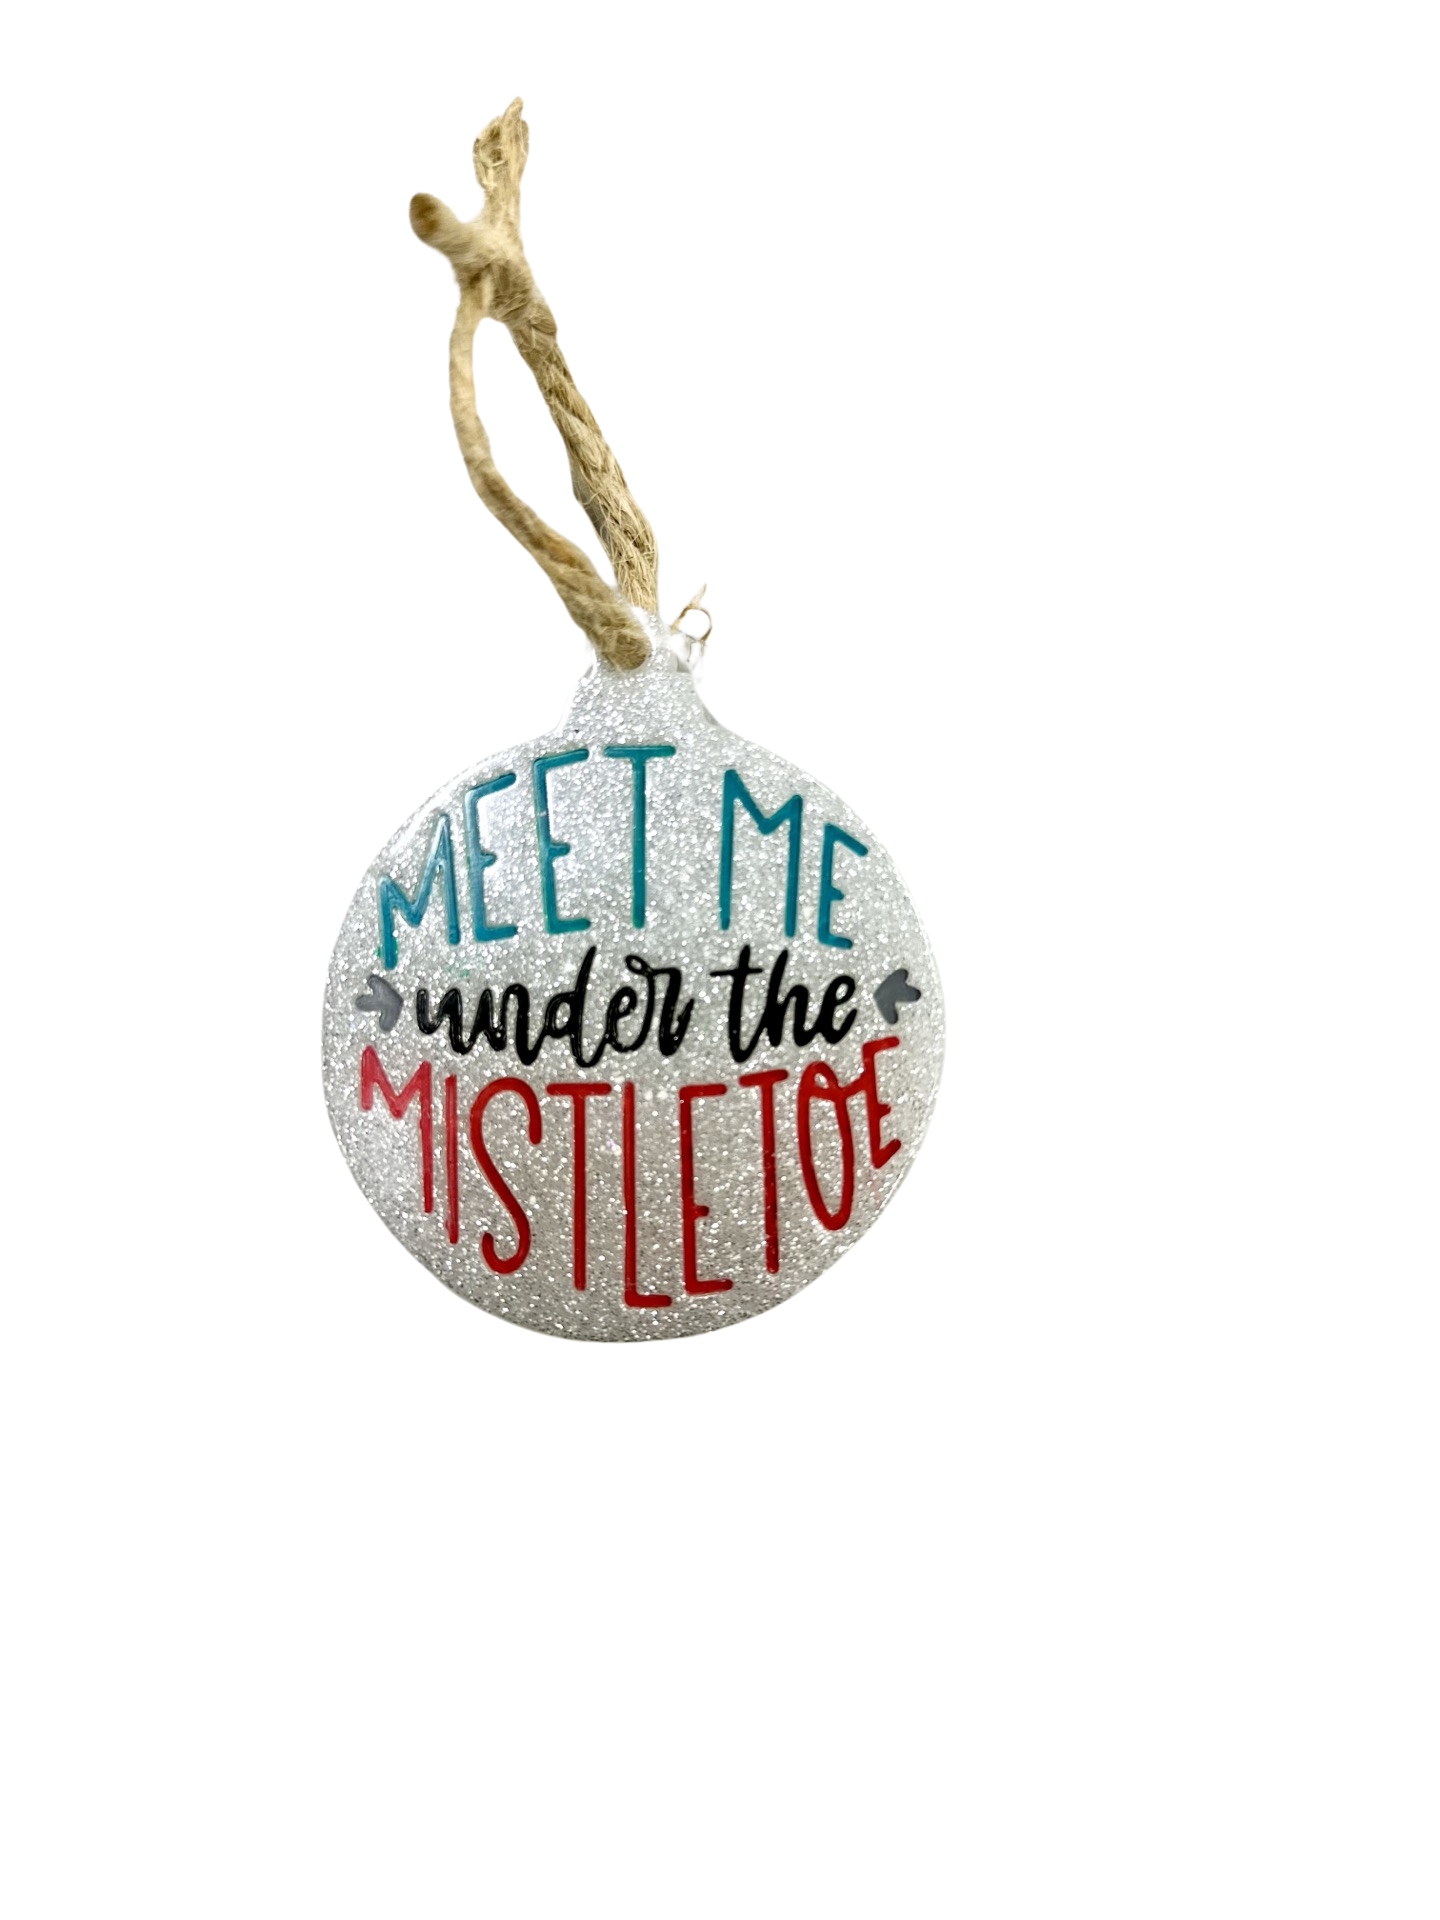 Meet Me Under the Mistletoe Christmas Ornament